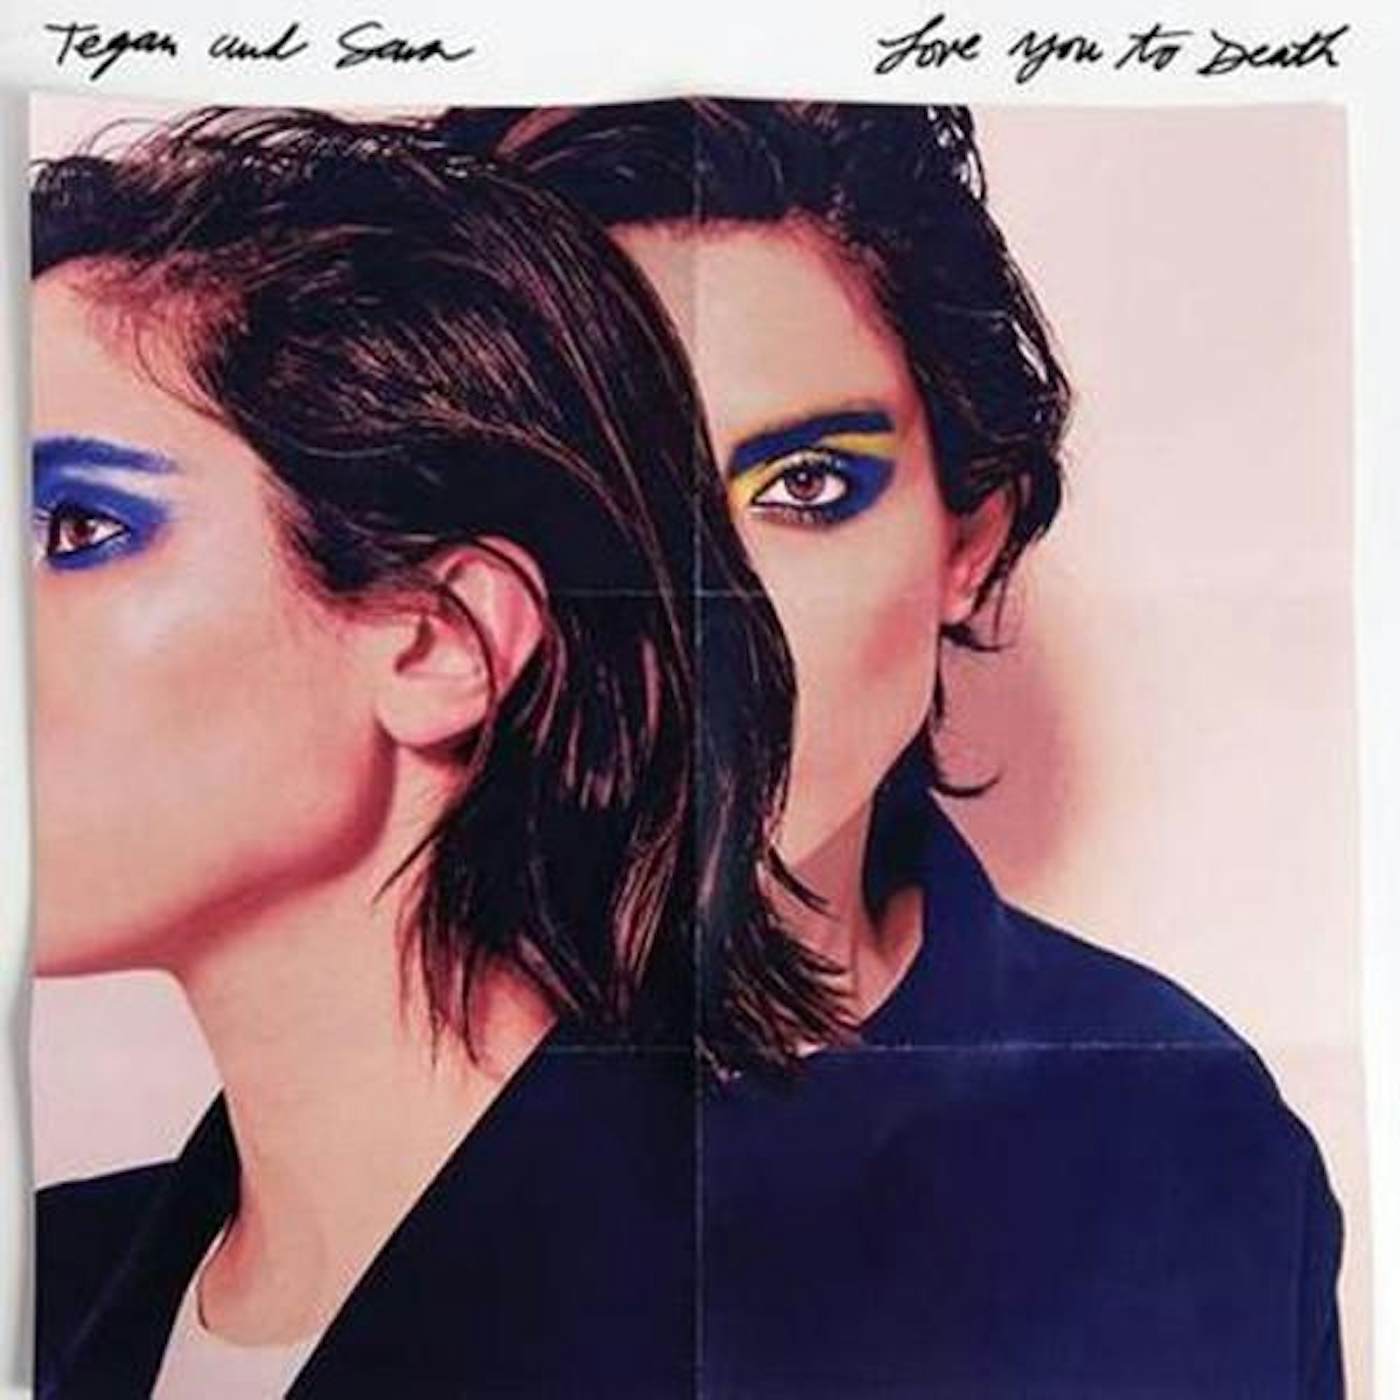 Tegan and Sara LOVE YOU TO DEATH (COLORED VINYL) Vinyl Record